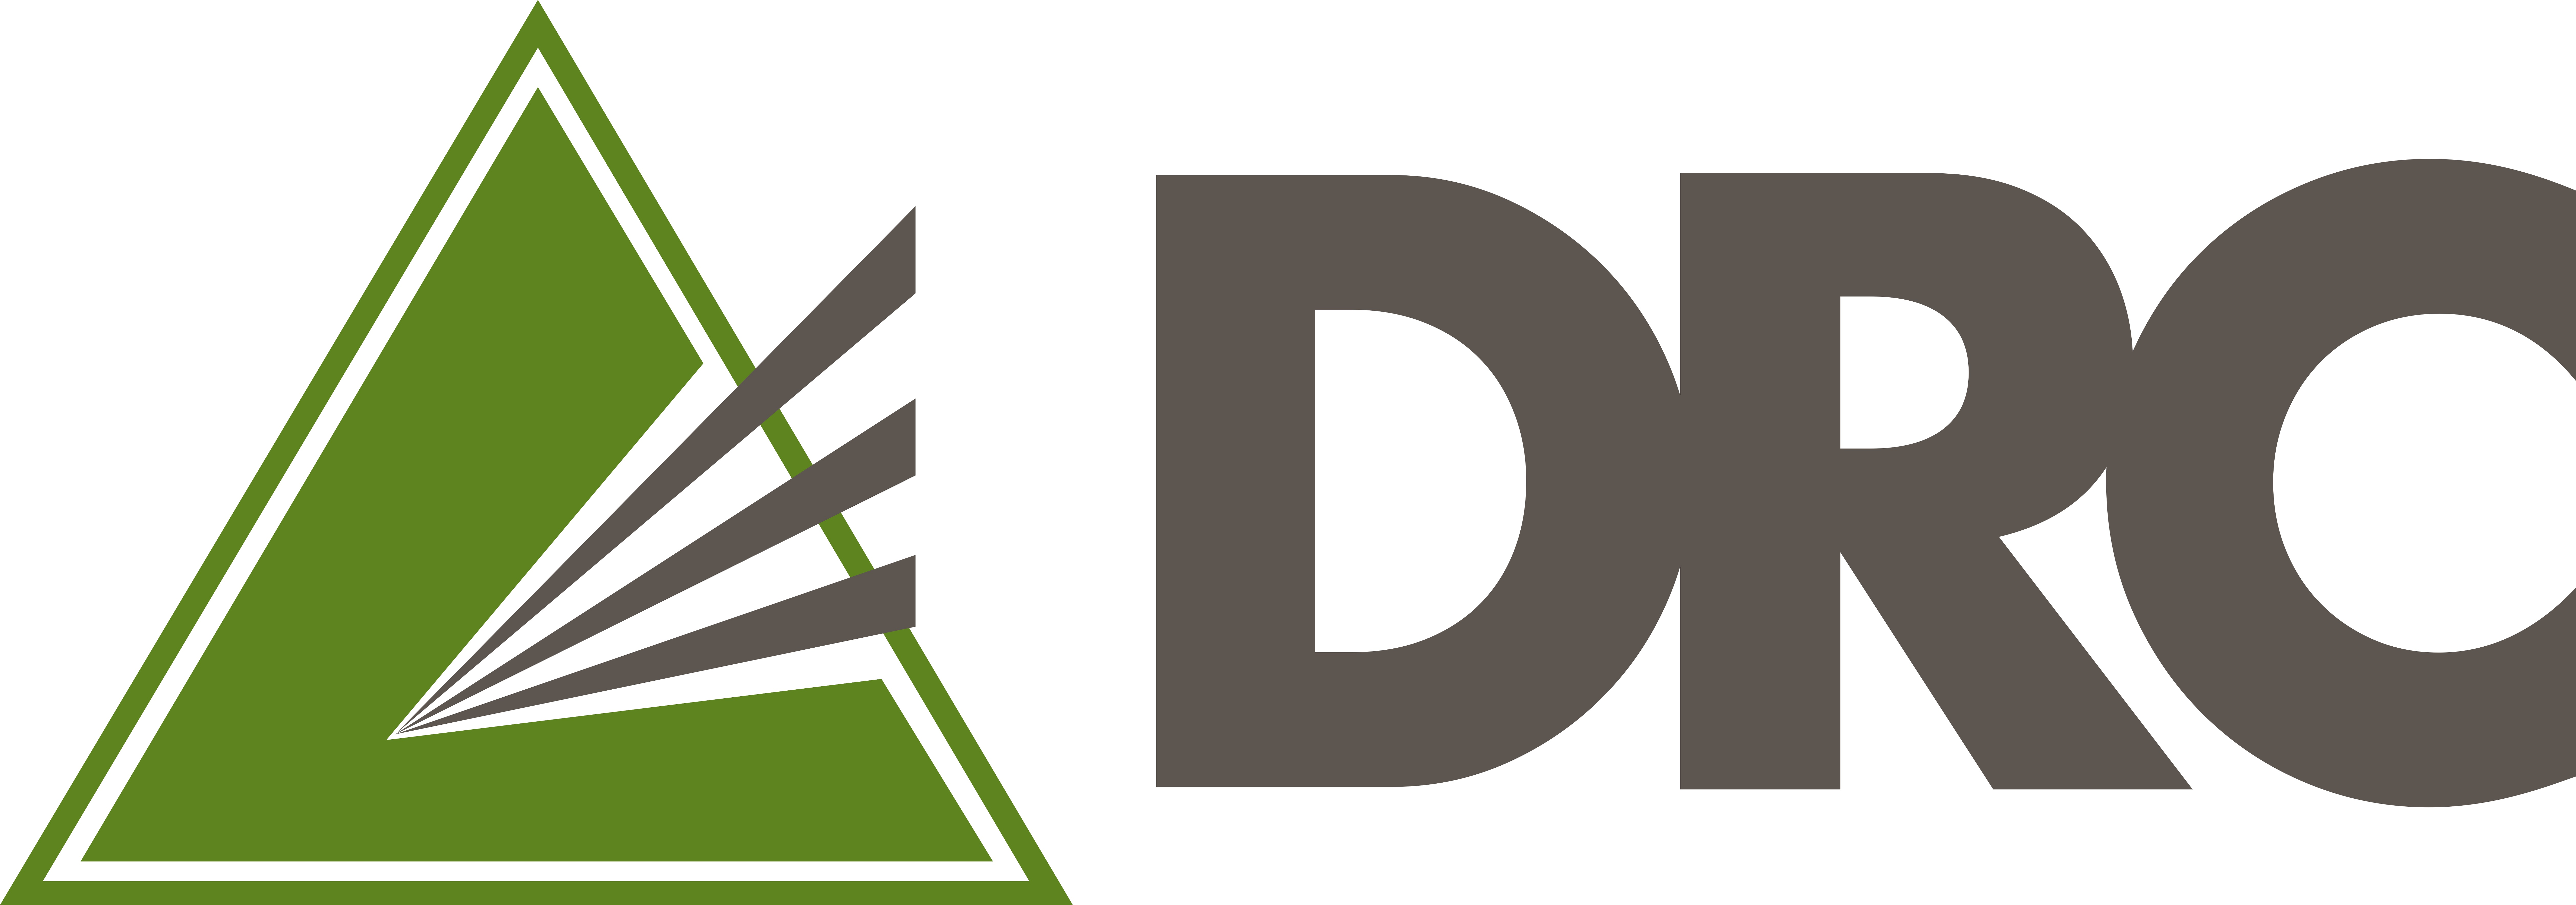 drc logo